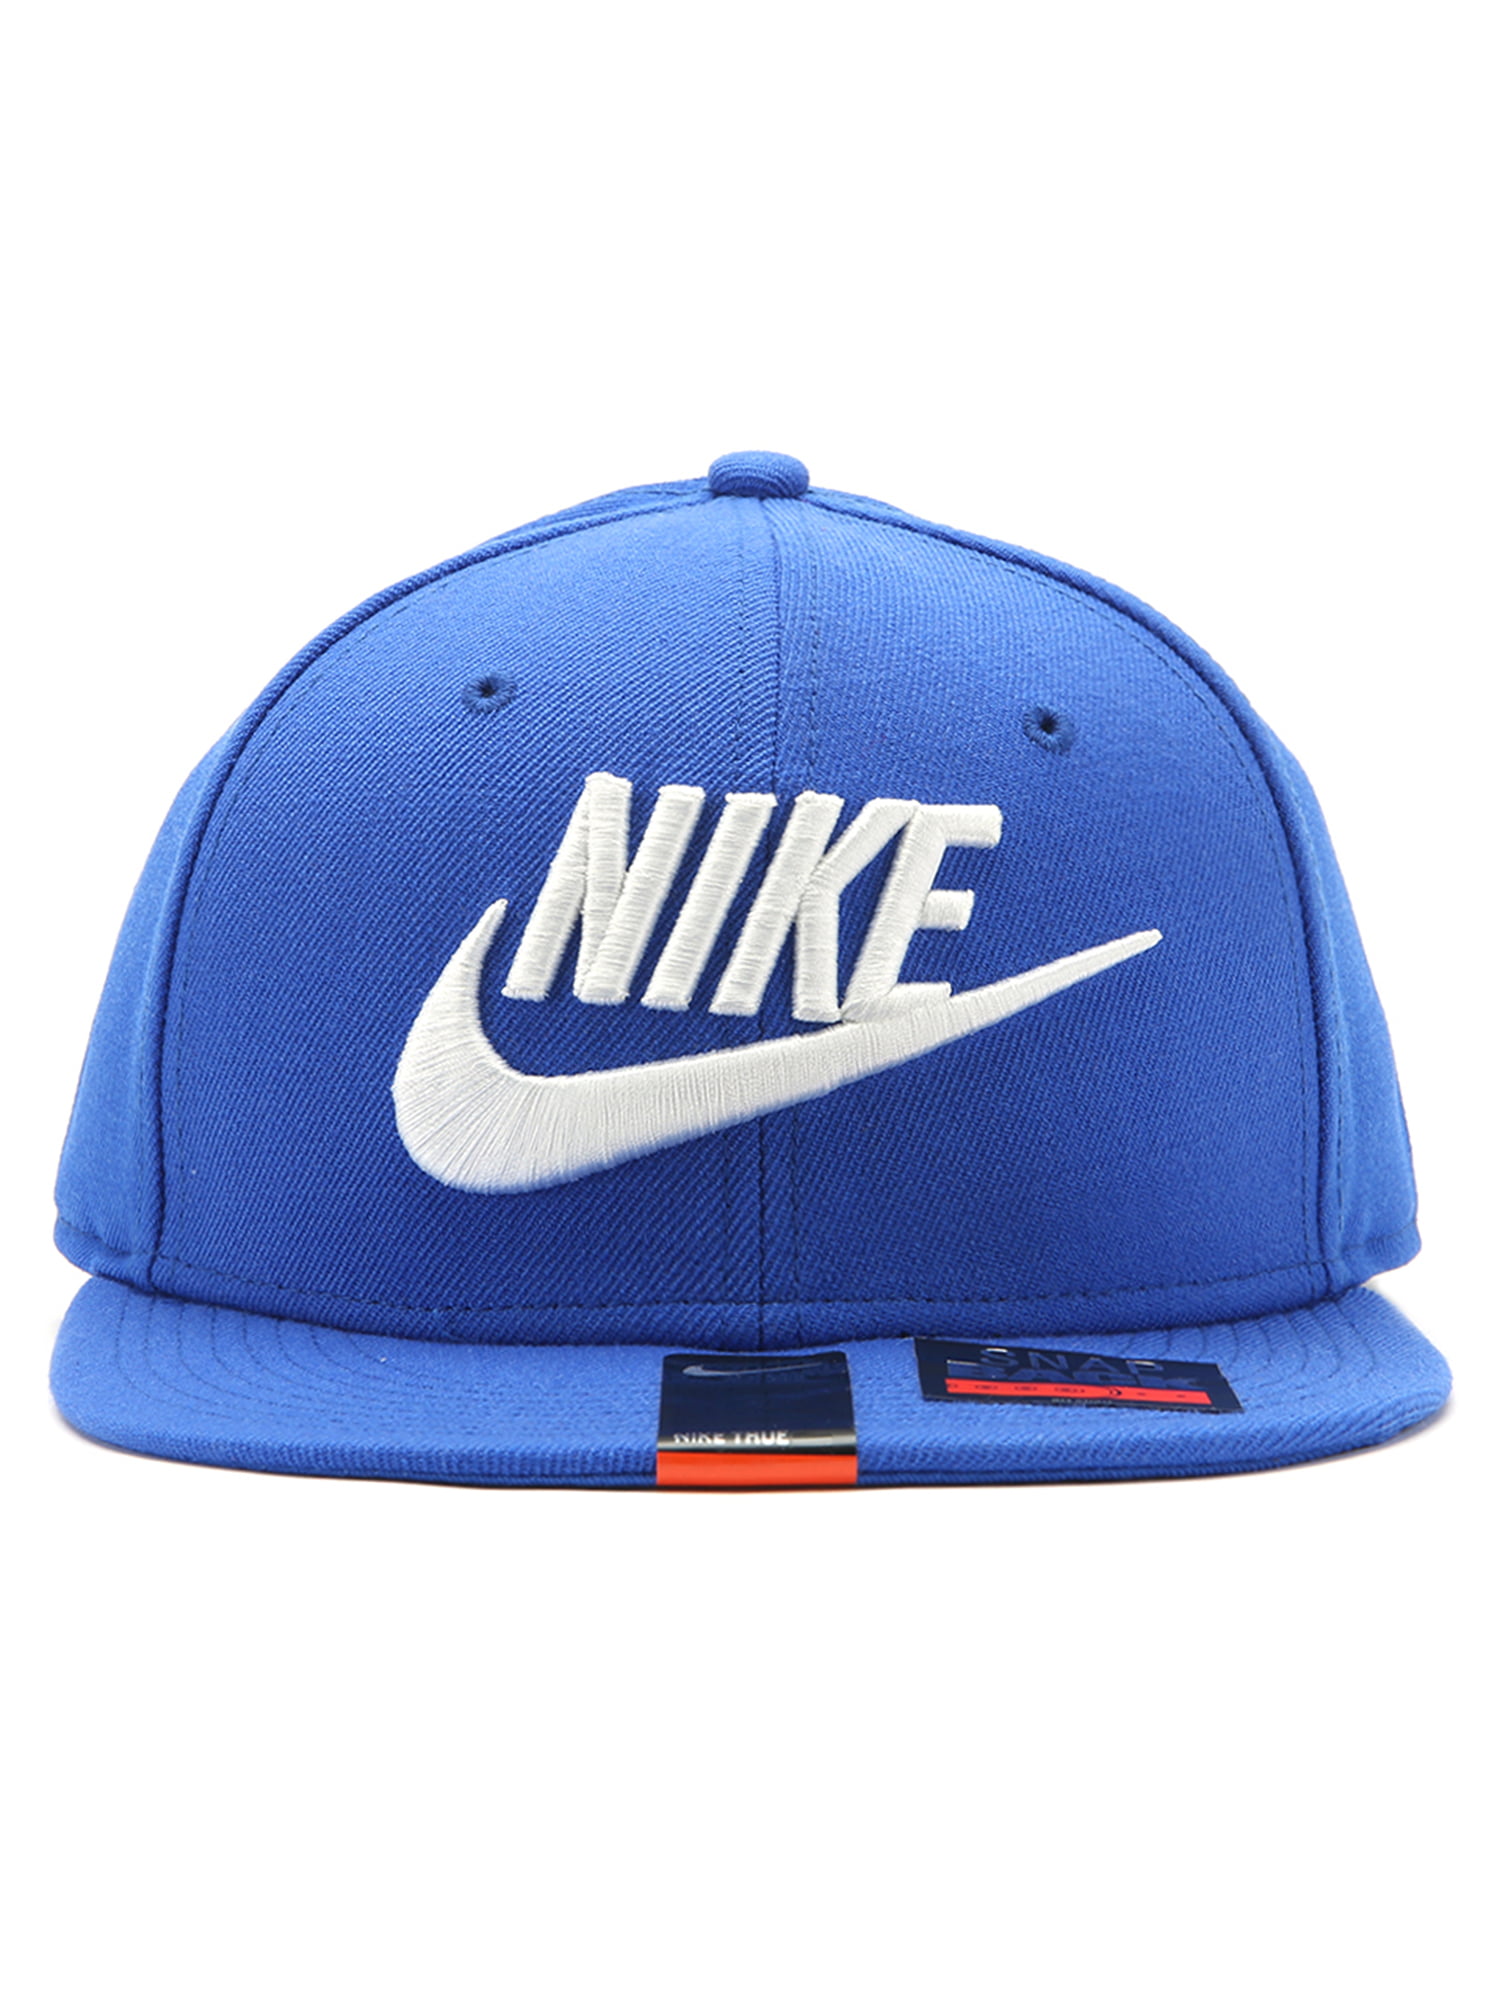 Nike Futura True 2 Hat Blue/White 584169 Snapback Royal